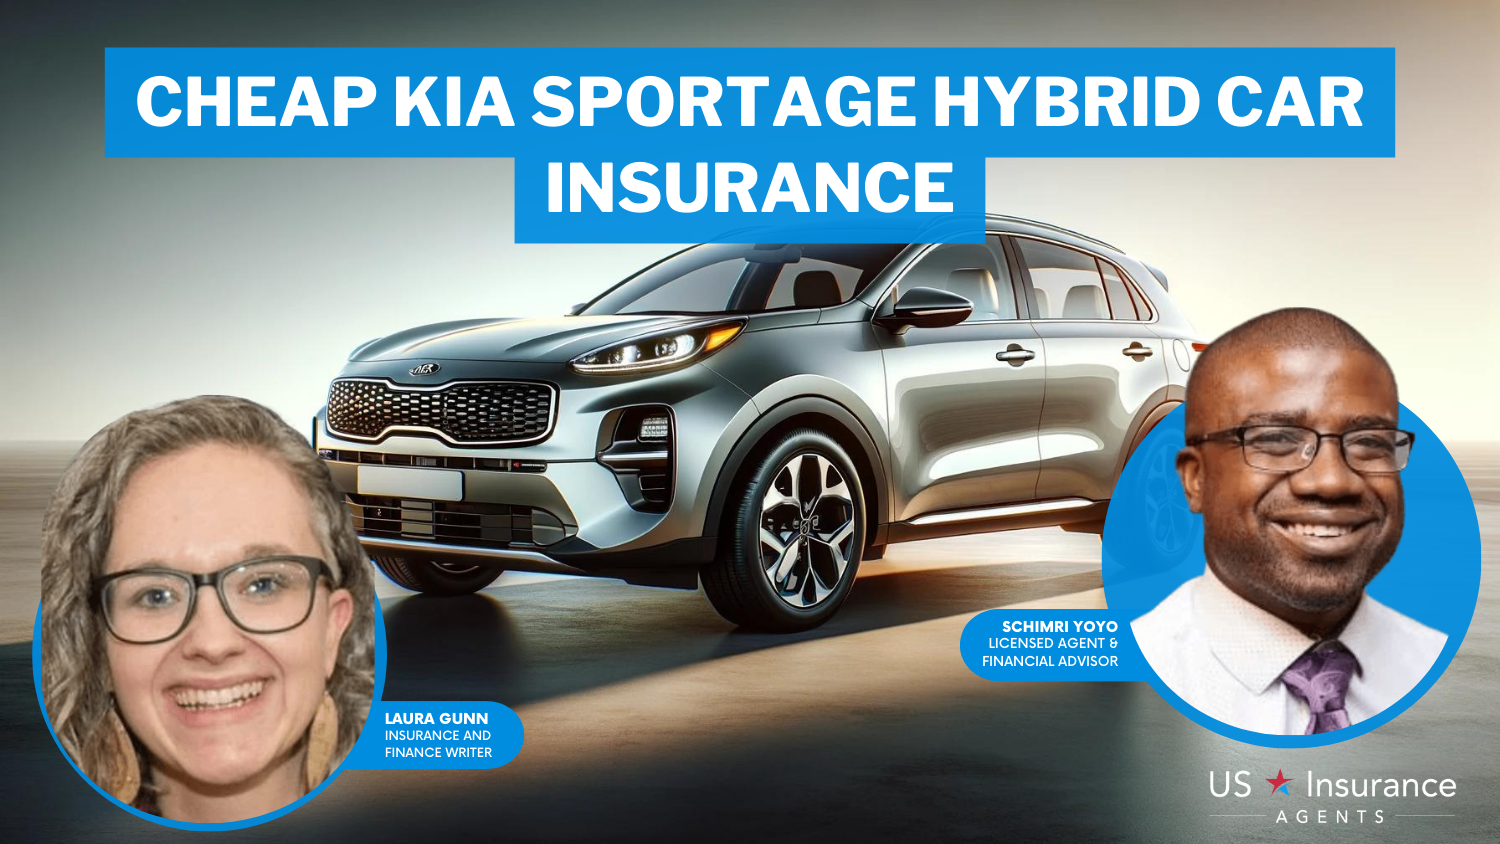 Cheap Kia Sportage Hybrid Car Insurance: State farm, USAA, and Progressive